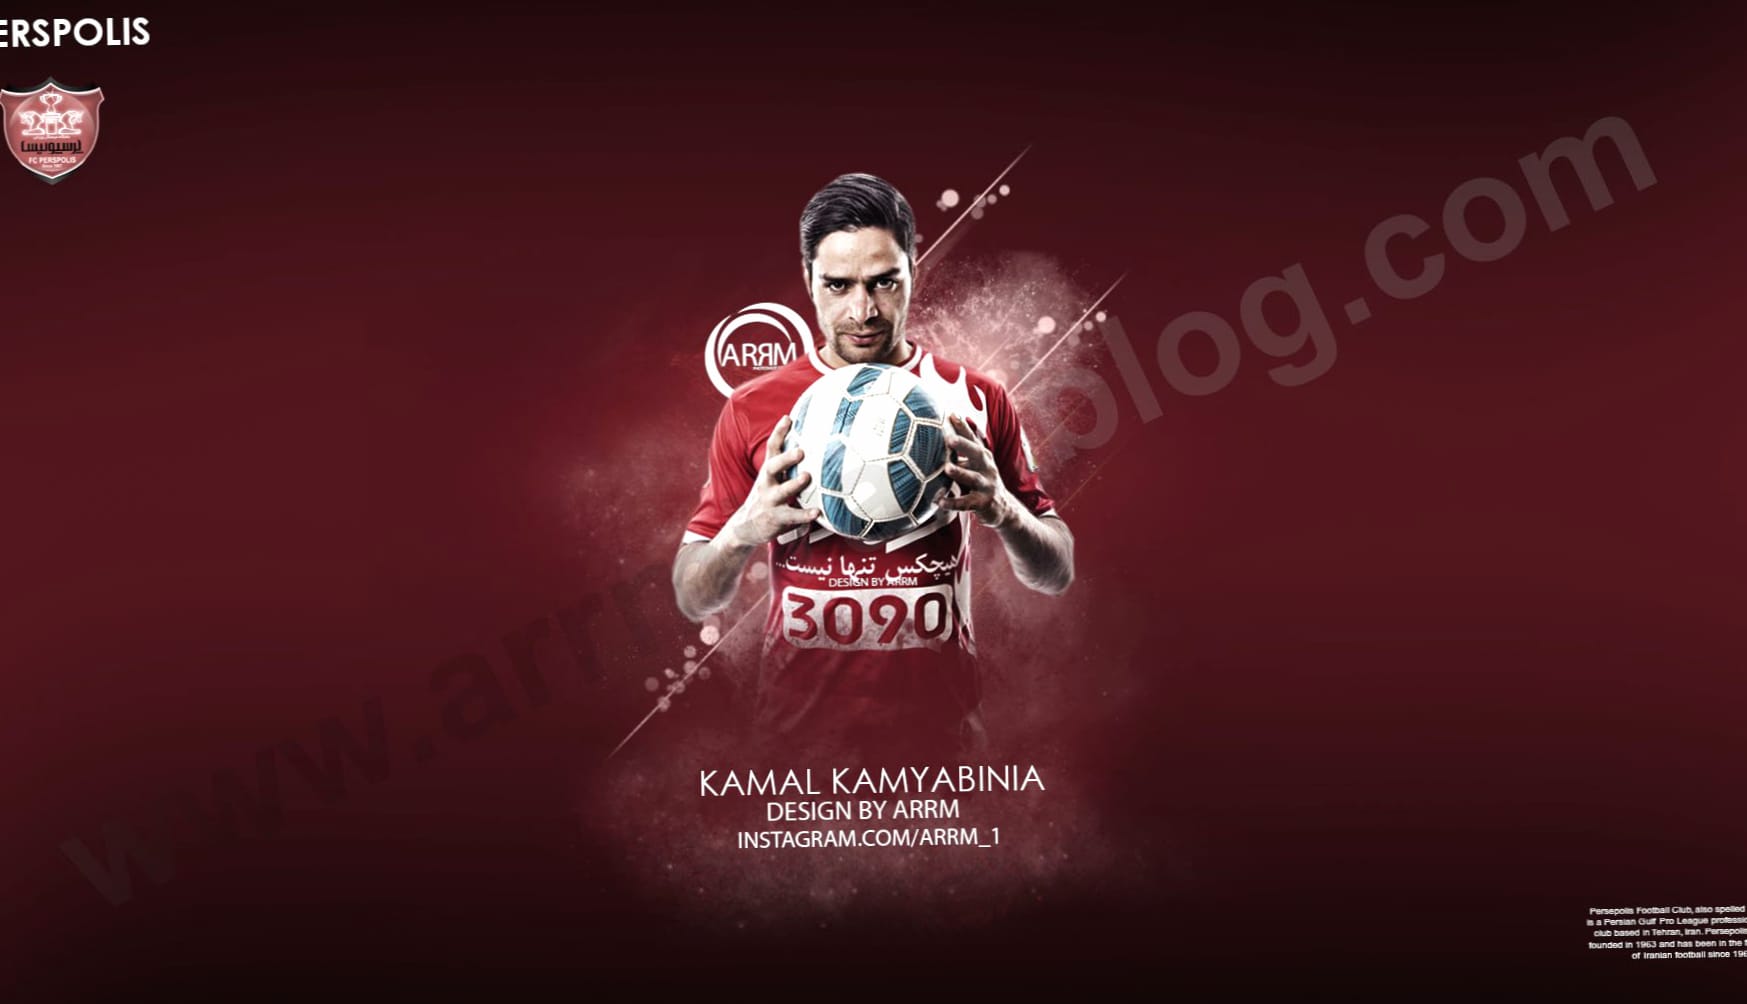 Kamal Kamyabinia at 640 x 1136 iPhone 5 size wallpapers HD quality